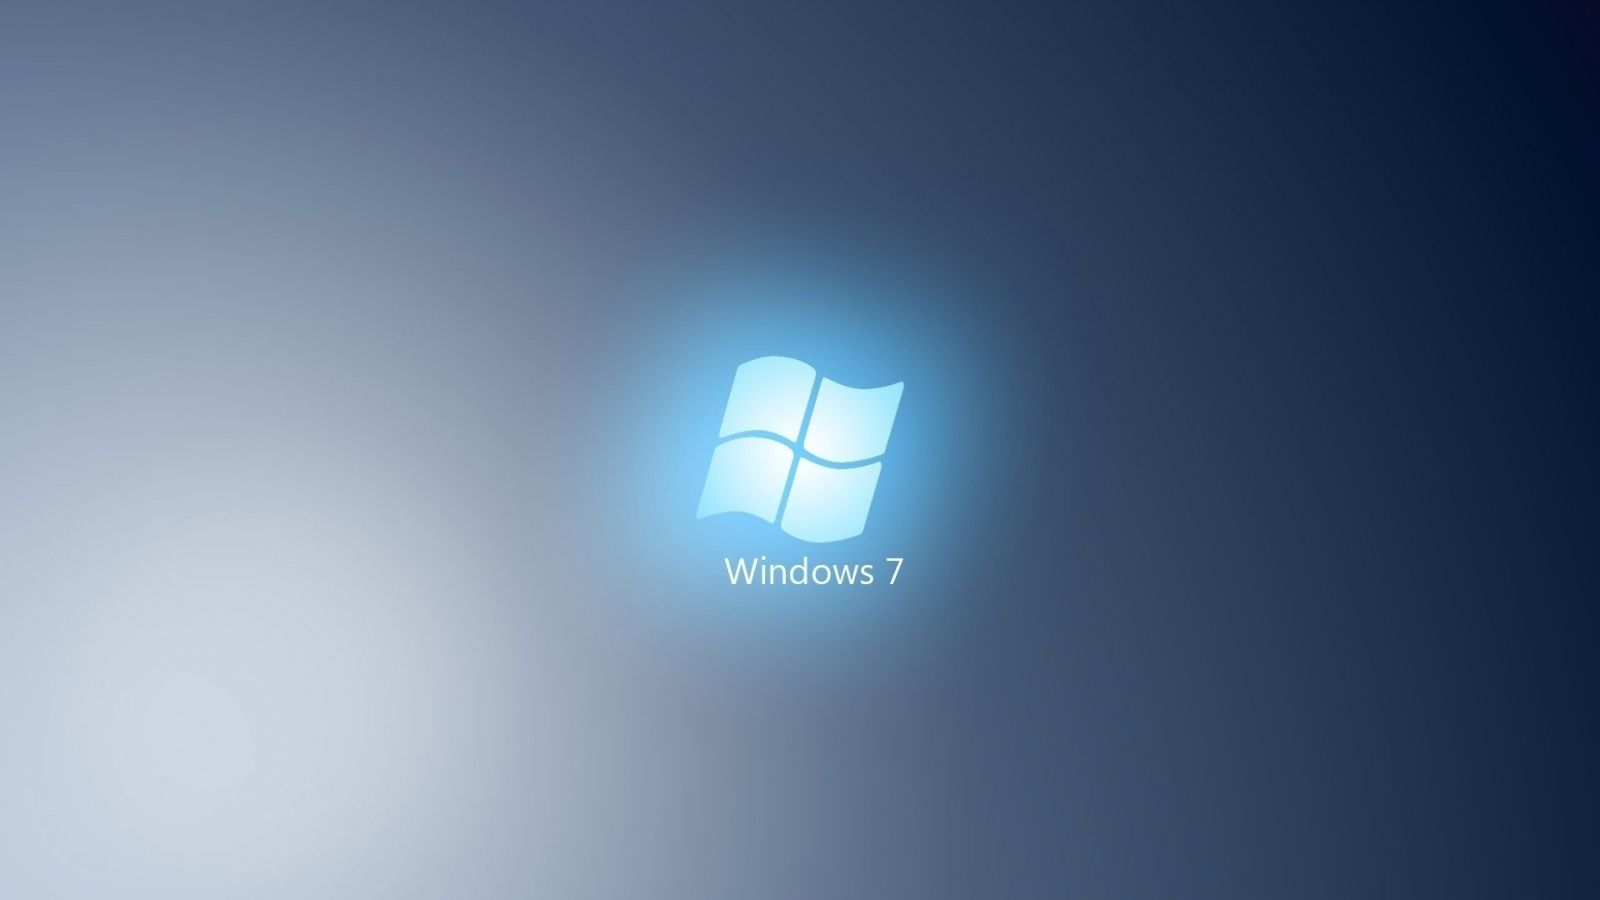 Windows 7 Hd - HD Wallpaper 